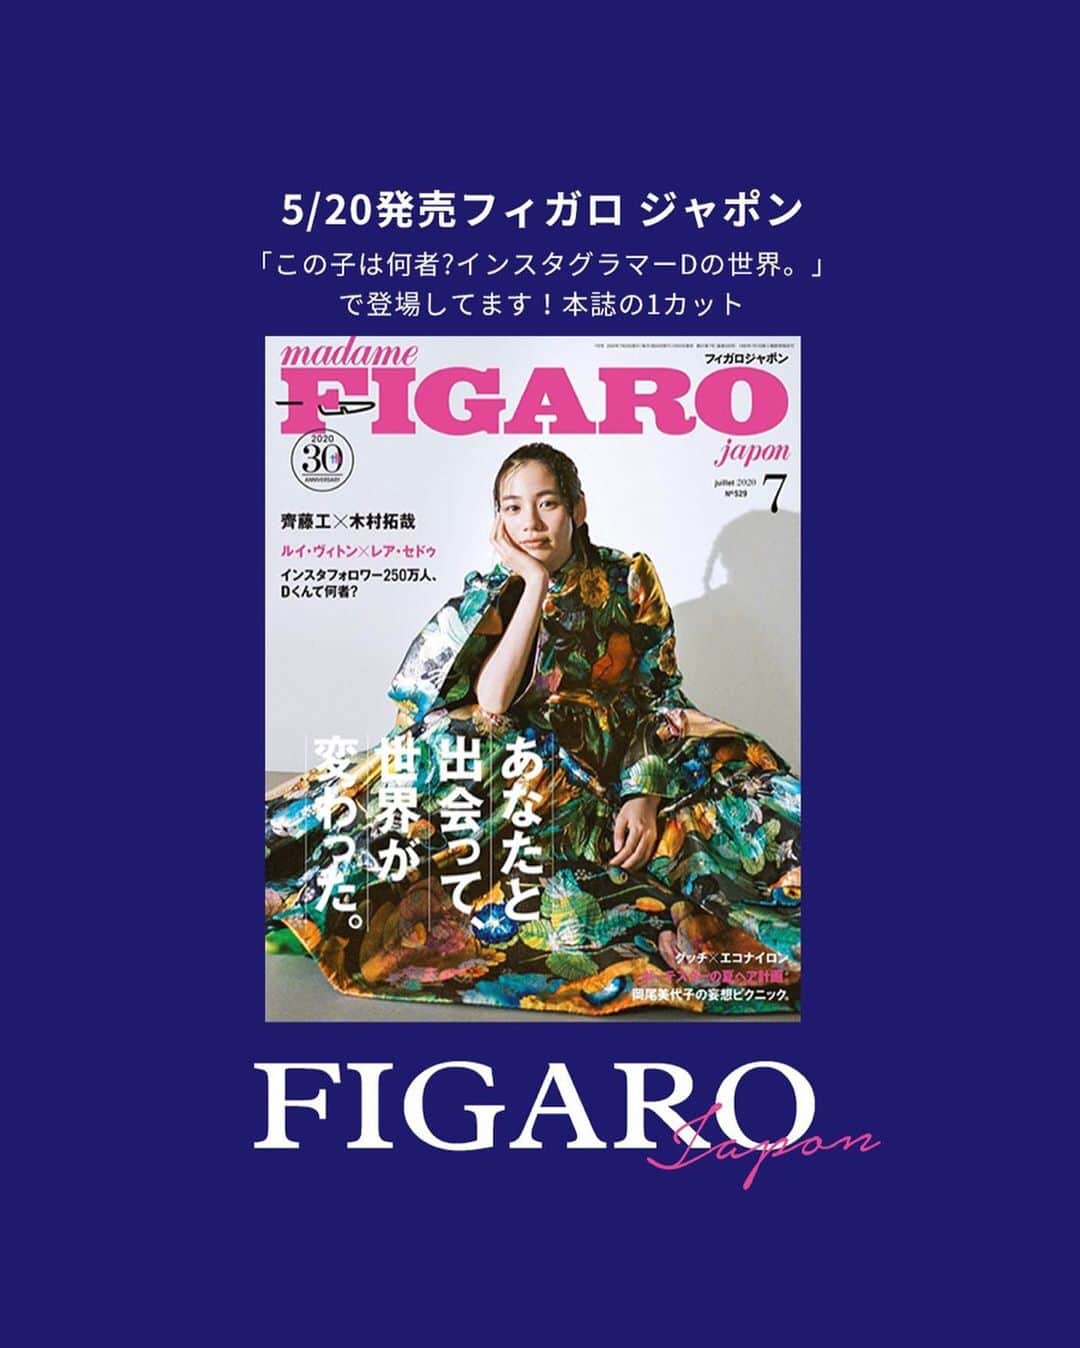 FashionDreamer Dさんのインスタグラム写真 - (FashionDreamer DInstagram)「ㅤ ㅤ ㅤ ㅤ  ㅤ  ㅤ ・🇺🇸🇮🇩🇸🇬🇲🇾🇬🇧🇦🇮🇦🇬🇺🇬🇦🇺🇧🇶🇬🇭🇬🇾🇨🇦🇨🇲🇬🇲🇨🇼🇰🇮🇬🇺🇨🇰🇨🇽🇬🇩🇰🇾🇰🇪🇨🇨🇼🇸🇿🇲🇸🇱🇬🇮🇯🇪🇯🇲🇸🇽🇿🇼🇸🇿🇰🇳🇻🇨🇸🇭🇱🇨🇸🇴🇸🇧🇹🇿🇹🇻🇹🇰🇩🇲🇹🇹🇹🇴🇳🇷🇳🇦🇳🇿🇳🇫🇵🇰🇻🇺🇧🇸🇵🇬🇧🇲🇵🇼🇧🇧🇭🇺🇵🇳🇫🇯🇵🇭🇧🇹🇫🇰🇧🇳🇧🇿🇧🇼🇲🇭🇲🇼🇲🇹🇮🇲🇫🇲🇲🇲🇲🇺🇲🇻🇲🇸🇱🇷🇷🇼🇱🇸🇮🇴🇻🇬🇿🇦🇸🇸🇻🇮🇦🇸🇲🇵 #FigaroJapon Magazine interviewed me. ㅤ ㅤ ㅤ ㅤ ㅤ ㅤ ㅤ ㅤ ㅤ ・🇮🇶🇾🇪🇸🇩🇪🇬🇪🇷🇦🇺🇰🇼🇰🇲🇶🇦🇸🇦🇩🇯🇸🇾🇴🇲🇹🇩🇹🇳🇧🇭🇵🇸🇲🇷🇲🇦🇯🇴🇱🇾🇱🇧🇪🇭 ‎قابلتني مجلة فيجارو اليابان.  ㅤ ㅤ ㅤ ㅤ ㅤ ㅤ ㅤ ㅤ ・🇫🇷🇼🇫🇨🇦🇬🇦🇨🇲🇬🇳🇬🇵🇨🇮🇰🇲🇨🇬🇨🇩🇧🇱🇵🇲🇩🇯🇯🇪🇨🇭🇸🇨🇸🇳🇹🇩🇹🇳🇹🇬🇳🇪🇳🇨🇭🇹🇻🇺🇧🇫🇧🇮🇧🇯🇲🇬🇾🇹🇲🇱🇲🇶🇲🇨🇱🇺🇷🇼🇷🇪🇬🇶🇨🇫🇬🇫🇵🇫🇹🇫 Figaro Japan Magazine m'a interviewé.  ㅤ ㅤ ㅤ ㅤㅤ ㅤ ㅤ ㅤ ㅤ ・🇪🇸🇮🇨🇦🇷🇺🇾🇪🇨🇸🇻🇨🇺🇬🇹🇨🇷🇨🇴🇨🇱🇩🇴🇳🇮🇵🇦🇵🇾🇵🇷🇻🇪🇵🇪🇧🇴🇭🇳🇲🇽🇬🇶 La revista Figaro Japan me entrevistó.  ㅤ ㅤ ㅤㅤ ㅤ ㅤ ㅤ ㅤ ・🇩🇪🇦🇹🇹🇬🇨🇭🇳🇦🇧🇪🇱🇮🇱🇺 Das Figaro Japan Magazine hat mich interviewt.  ㅤ ㅤ ㅤ ㅤㅤ ㅤ ㅤ ㅤ ㅤ ・🇵🇹🇧🇷🇦🇴🇨🇻🇬🇼🇸🇹🇧🇲🇲🇴🇲🇿🇹🇱 A Revista Figaro Japan me entrevistou.  ㅤ ㅤ ㅤ ㅤㅤ ㅤ ㅤ ㅤ ㅤ ・🇰🇷 피가로 재팬 매거진이 인터뷰를했습니다.  ㅤ ㅤ ㅤ ㅤㅤ ㅤ ㅤ ㅤ ㅤ ・🇹🇷🇦🇿🇰🇬🇰🇿🇹🇯🇺🇿 Figaro Japan Magazine benimle röportaj yaptı.  ㅤ ㅤ ㅤ ㅤ ㅤ ㅤ ㅤ ㅤ ・🇹🇼 《無花果日本雜誌》採訪了我。  ㅤ ㅤ ㅤ ㅤ ㅤ ㅤ ㅤ ・🇳🇱🇦🇼🇨🇼🇸🇽🇸🇷🇧🇪 Figaro Japan Magazine interviewde mij.  ㅤ ㅤ ㅤ ㅤ ㅤ ㅤ ㅤ ・🇮🇹🇦🇺🇸🇲🇨🇭🇻🇦 La rivista Figaro Japan mi ha intervistato.  ㅤ ㅤ ㅤ ㅤ ㅤ ㅤ ㅤ ・🇷🇺🇰🇿🇬🇪🇹🇯🇹🇲🇧🇾🇲🇳 Журнал Figaro Japan взял у меня интервью.  ㅤ ㅤ ㅤ ㅤ ㅤ ㅤ ㅤ ・🇨🇳、上海、北京、🇲🇴 费加罗日本杂志采访了我。 ㅤ ㅤ ㅤ ㅤㅤ ㅤ ㅤ ㅤ ㅤ ・🇹🇭 นิตยสาร Figaro Japan สัมภาษณ์ฉัน  ㅤ ㅤ ㅤ ㅤㅤ ㅤ ㅤ ㅤ ㅤ ・🇮🇳🇧🇩🇲🇻 फिगारो जापान पत्रिका ने मेरा साक्षात्कार लिया। ㅤ ㅤ ㅤ ㅤㅤ ㅤ ㅤ ㅤ ㅤ ・🇸🇪🇦🇽🇫🇮 La revista Figaro Japan me entrevistó.  ㅤ ㅤ ㅤ ㅤㅤ ㅤ ㅤ ㅤ ㅤ ・🇩🇰🇬🇱🇫🇴 Figaro Japan Magazine interviewede mig.  ㅤ ㅤ ㅤ ㅤㅤ ㅤ ㅤ ㅤ ㅤ ・🇻🇳 Tạp chí Figaro Nhật Bản đã phỏng vấn tôi.  ㅤ ㅤ ㅤ ㅤㅤ ㅤ ㅤ ㅤ ㅤ ・🇰🇪🇨🇬🇹🇿🇲🇪🇷🇼 Интервјуисао ме Фигаро Јапан Магазине.  ㅤ ㅤ ㅤ ㅤㅤ ㅤ ㅤ ㅤ ㅤ ・🇷🇴🇲🇩🇷🇸🇭🇺🇩🇪🇷🇺🇺🇦🇮🇱🇨🇦 Revista Figaro Japonia m-a intervievat.  ㅤ ㅤ ㅤ ㅤㅤ ㅤ ㅤ ㅤ ㅤ ・🇭🇰 採訪會喺聽日發行嘅時尚雜誌《費加羅·贾蓬》上發表。  ㅤ ㅤ ㅤ ㅤㅤ ㅤ ㅤ ㅤ ㅤ Thanks @m.y.k.4.4 supported me. ㅤ ㅤ」5月20日 18時45分 - d_japanese